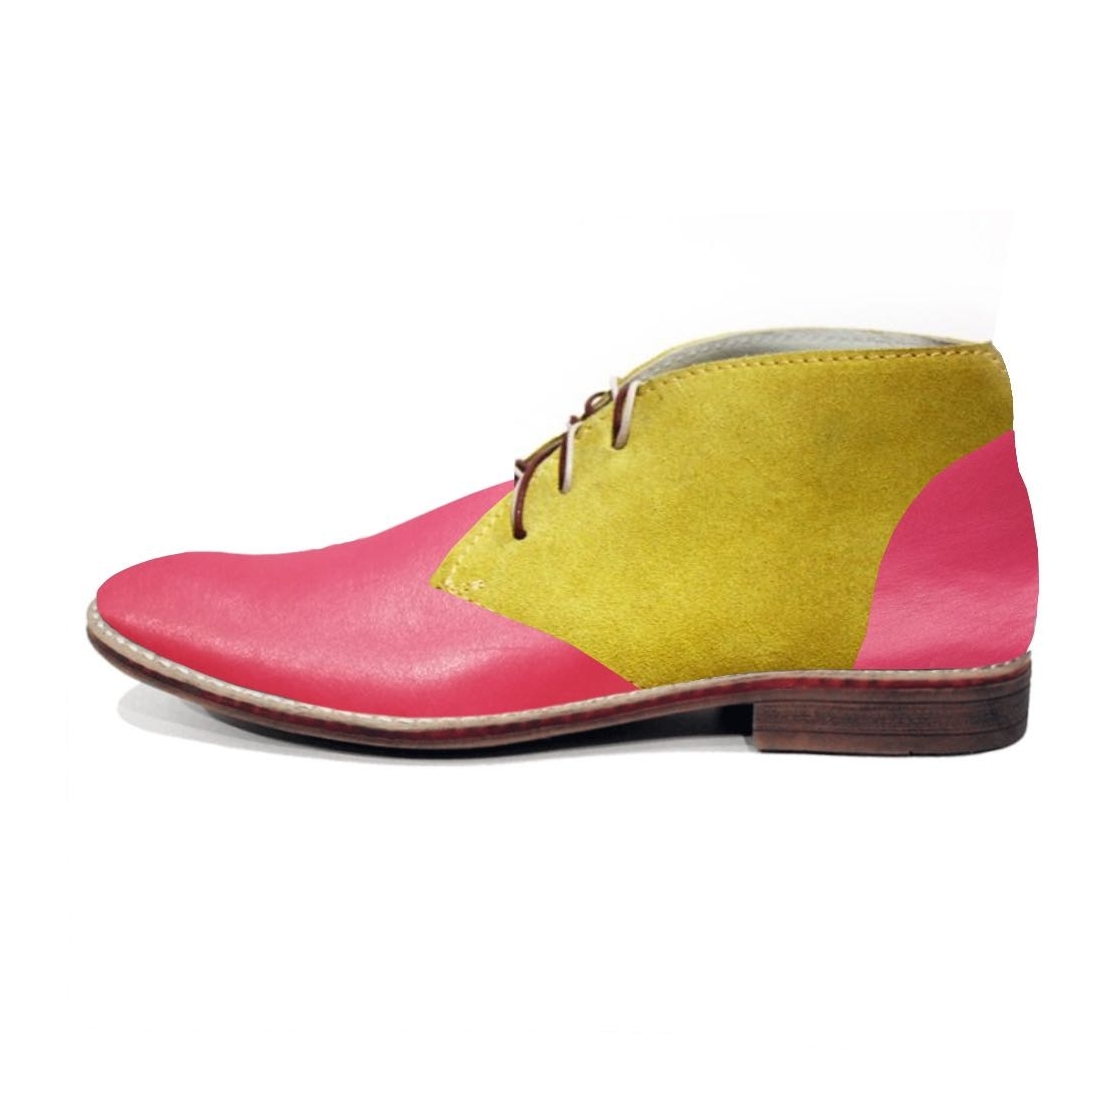 Modello Primavello - Chukka Boots - Handmade Colorful Italian Leather Shoes